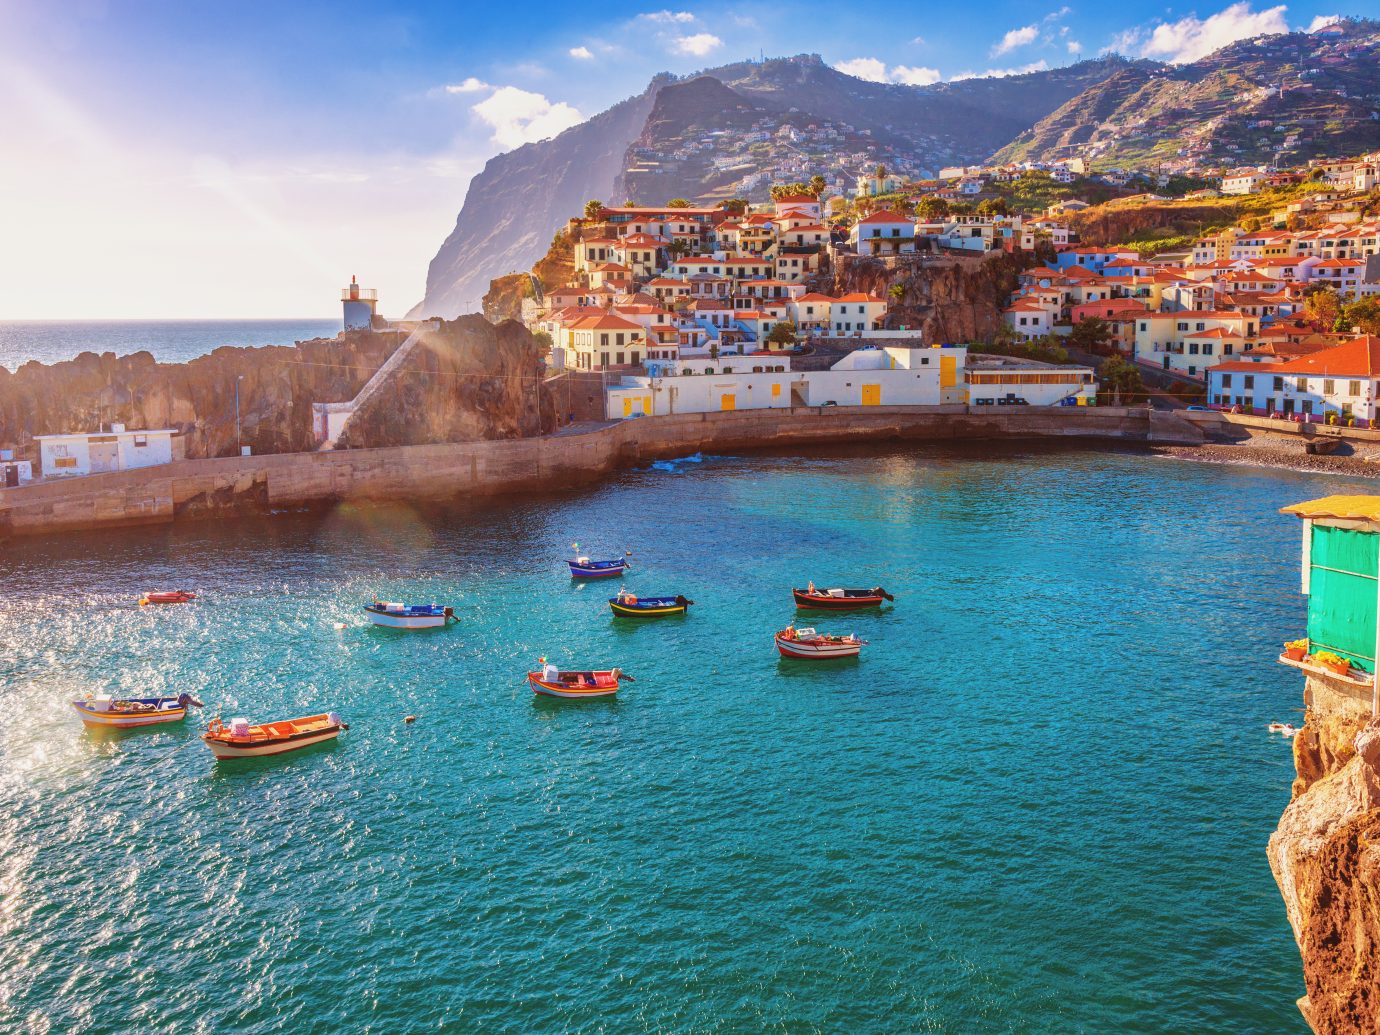 The beautiful fishing village of Camara de Lobos on the portugese Island of Madeira in warm evening sunshine light.